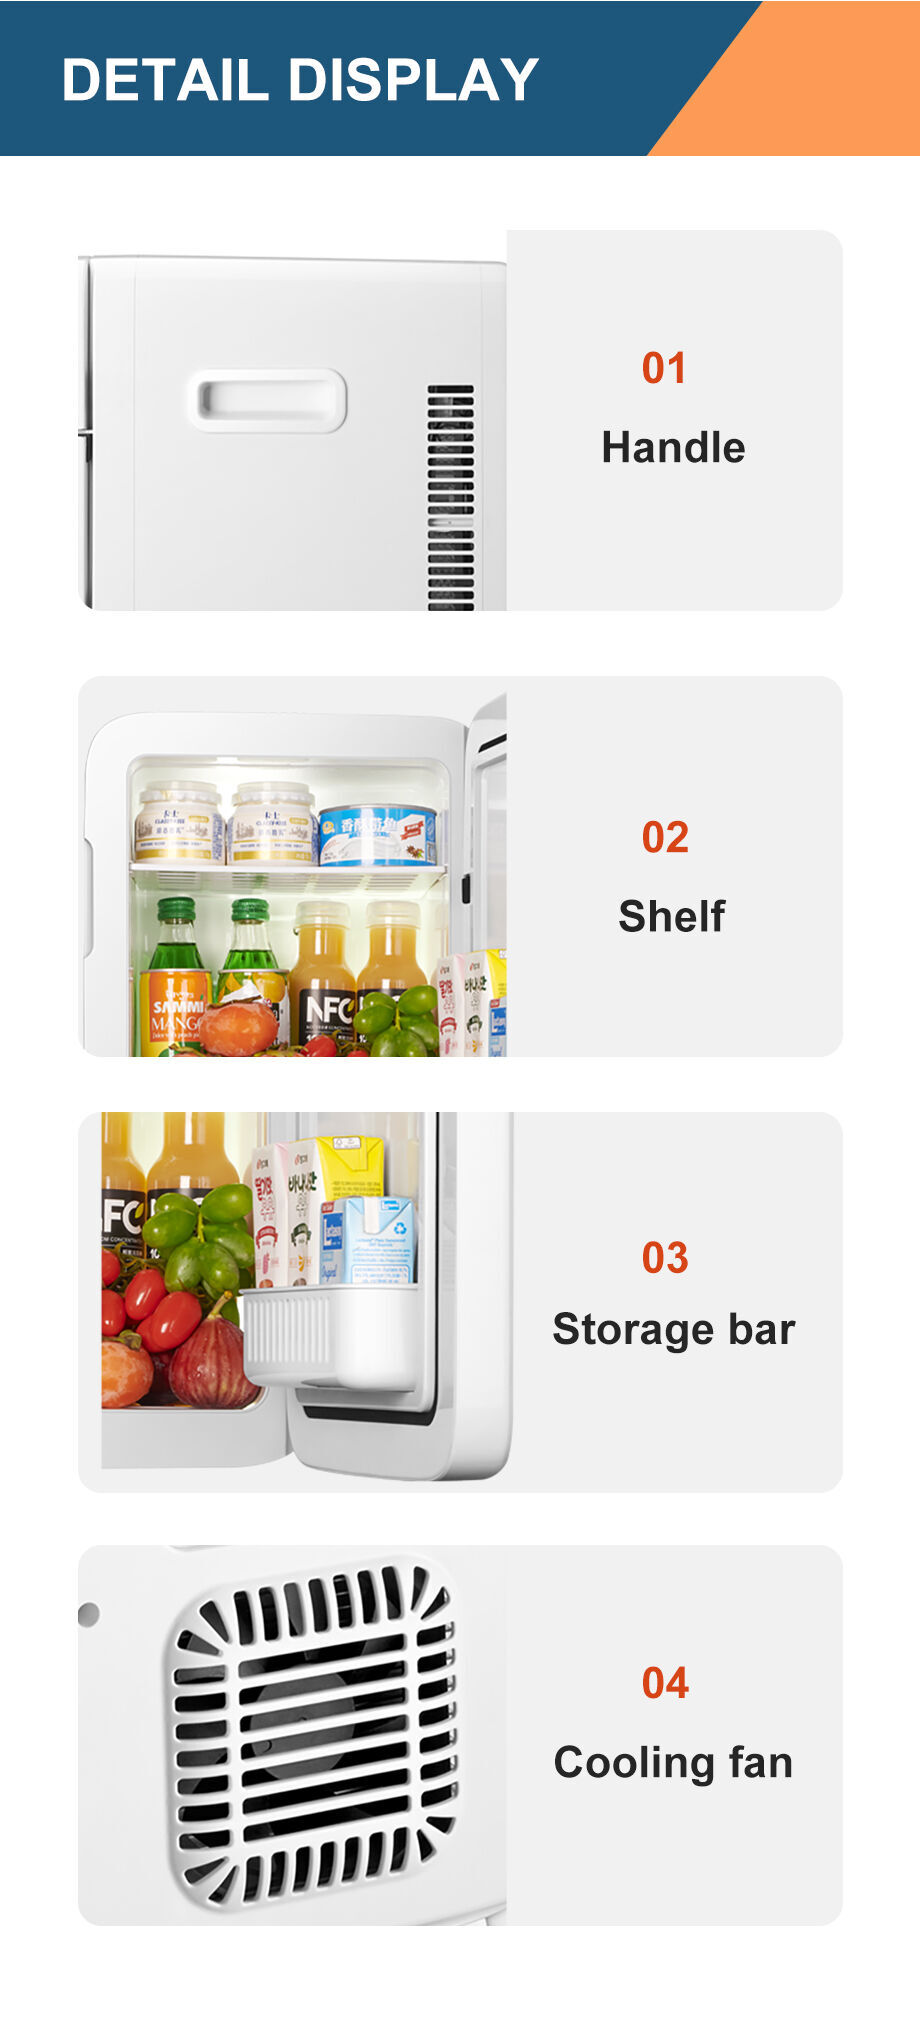 Kaufen Sie China Großhandels-12l Mini-kühlschrank Für Medizin Tragbarer Mini -kühlschrank Zu Einem Tollen Preis und Mini Kühlschrank Für Medizin  Großhandelsanbietern zu einem Preis von 46.5 USD